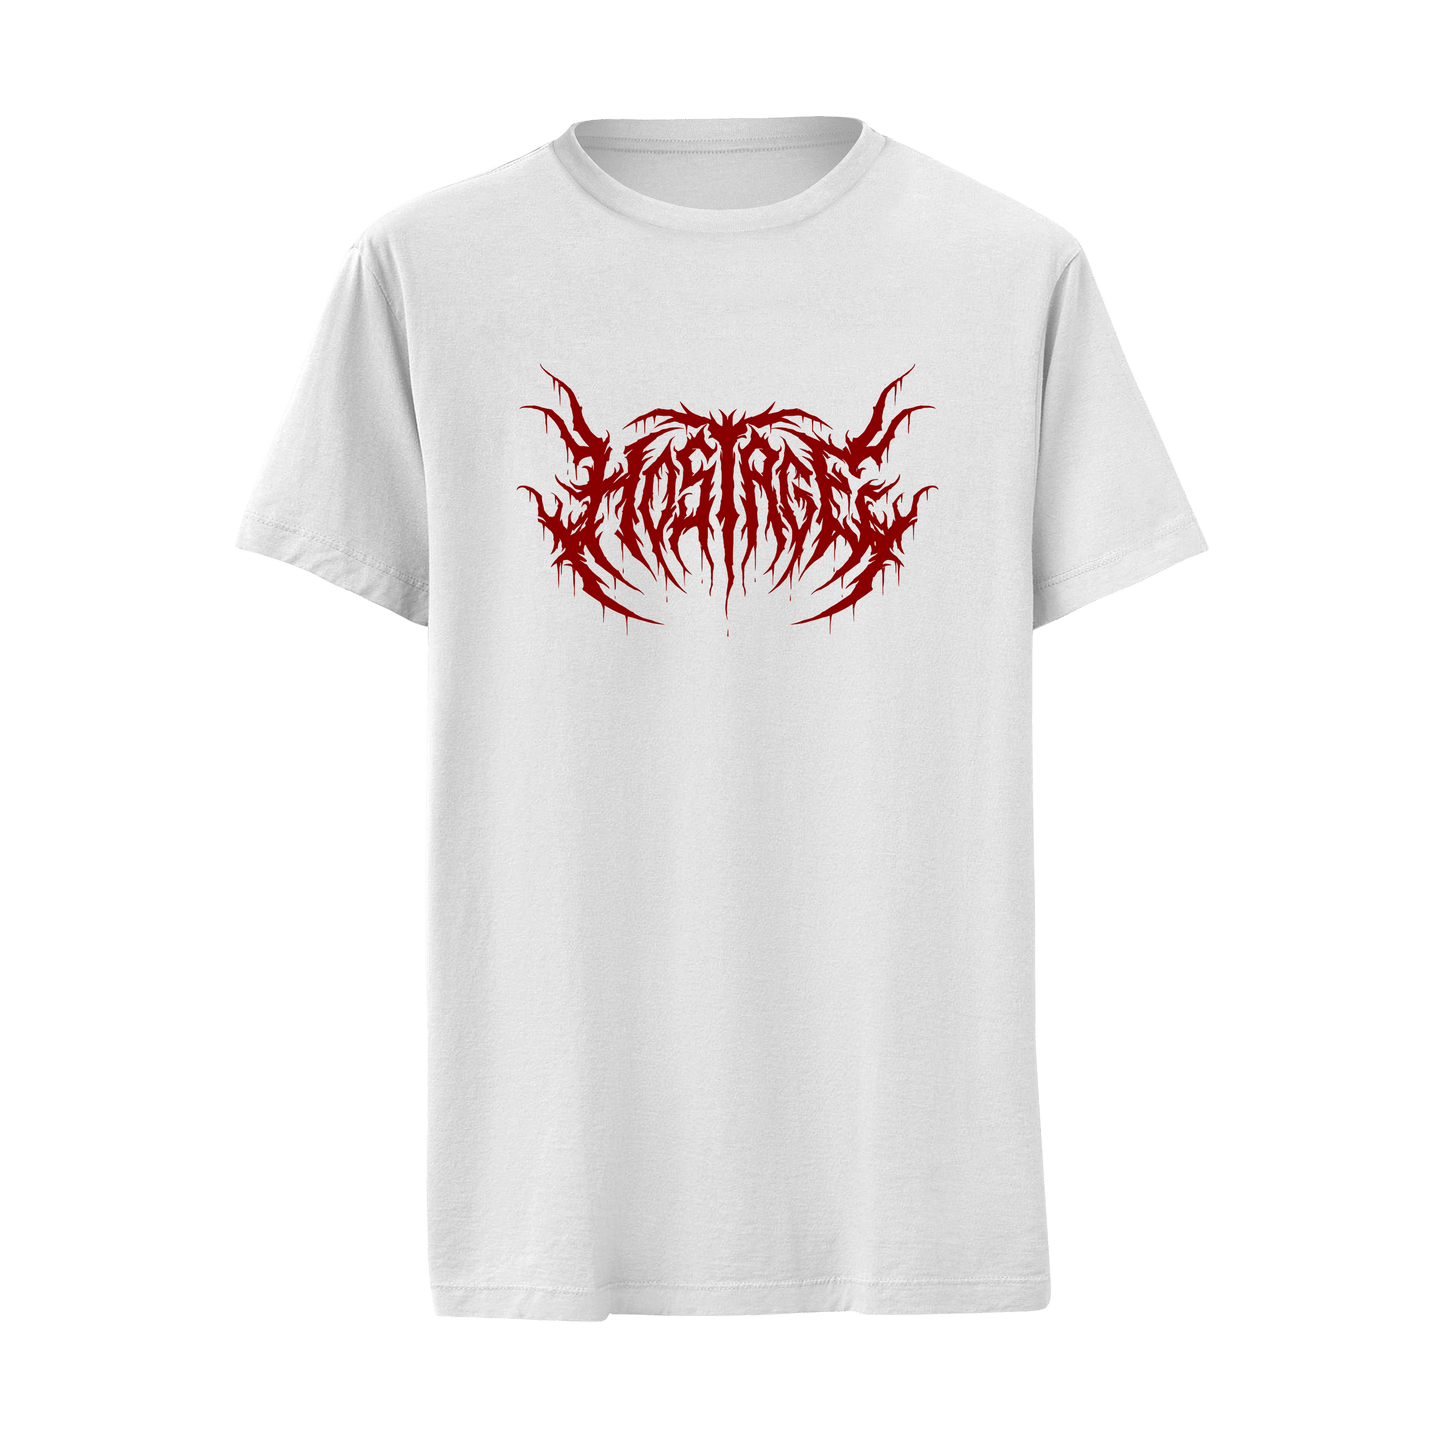 HOSTAGE Deathmetal Logo White T-Shirt Merchandise front